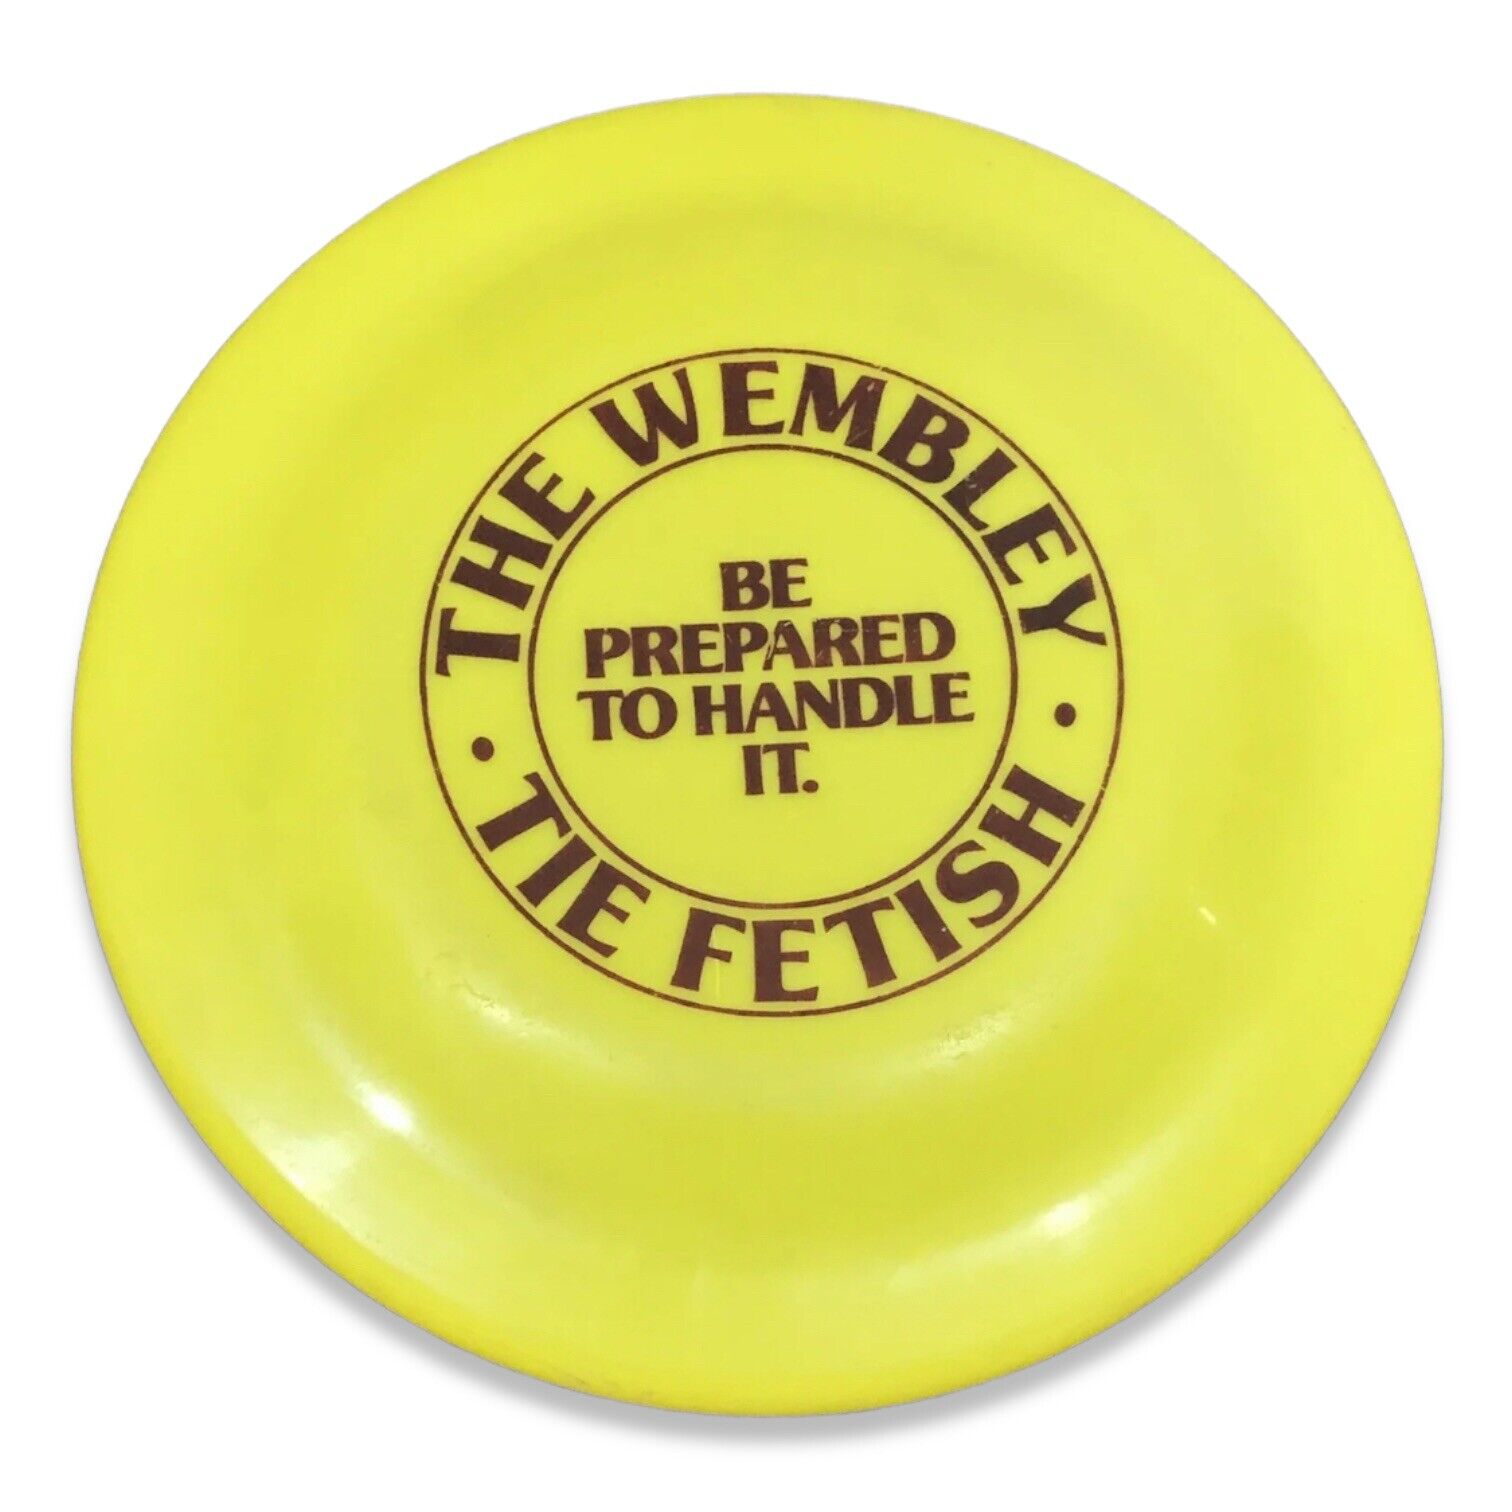 Vintage The Wembley Neckties Tie Fetish Yellow Frisbee Be Prepared to Handle It